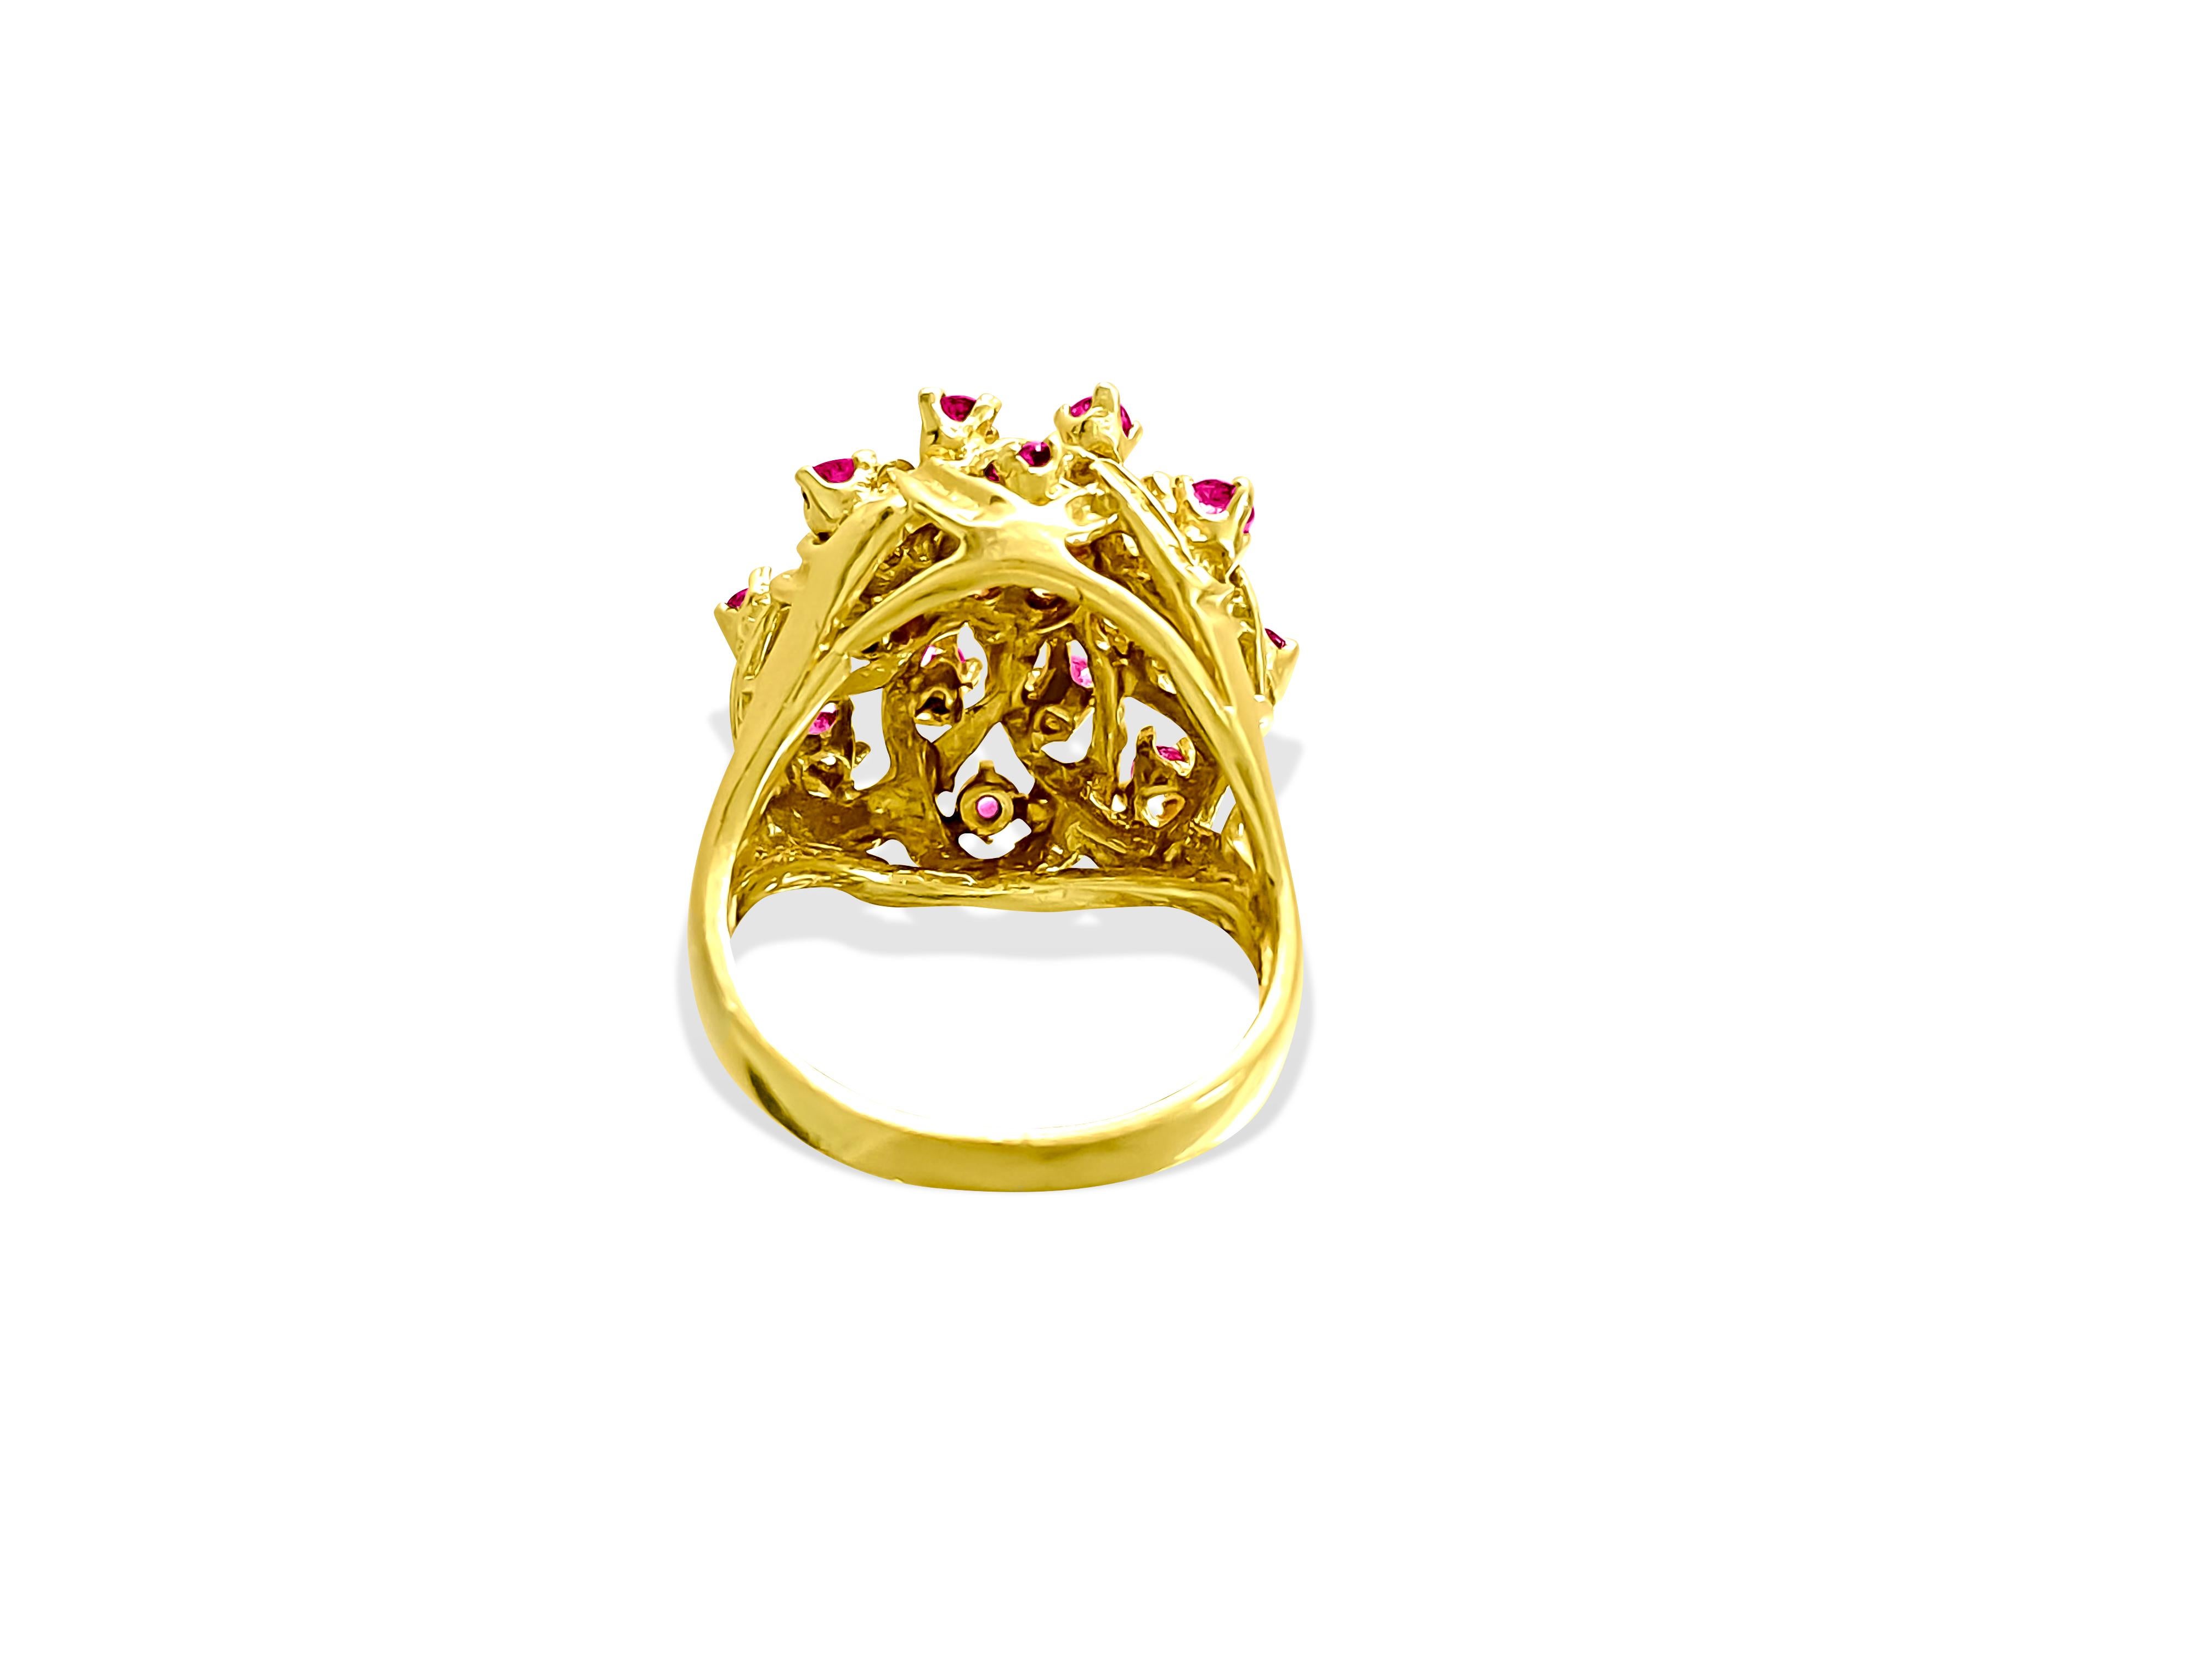 Brilliant Cut 14K Yellow Gold, 1.10 Carat VINTAGE White Diamond Ring. For Sale